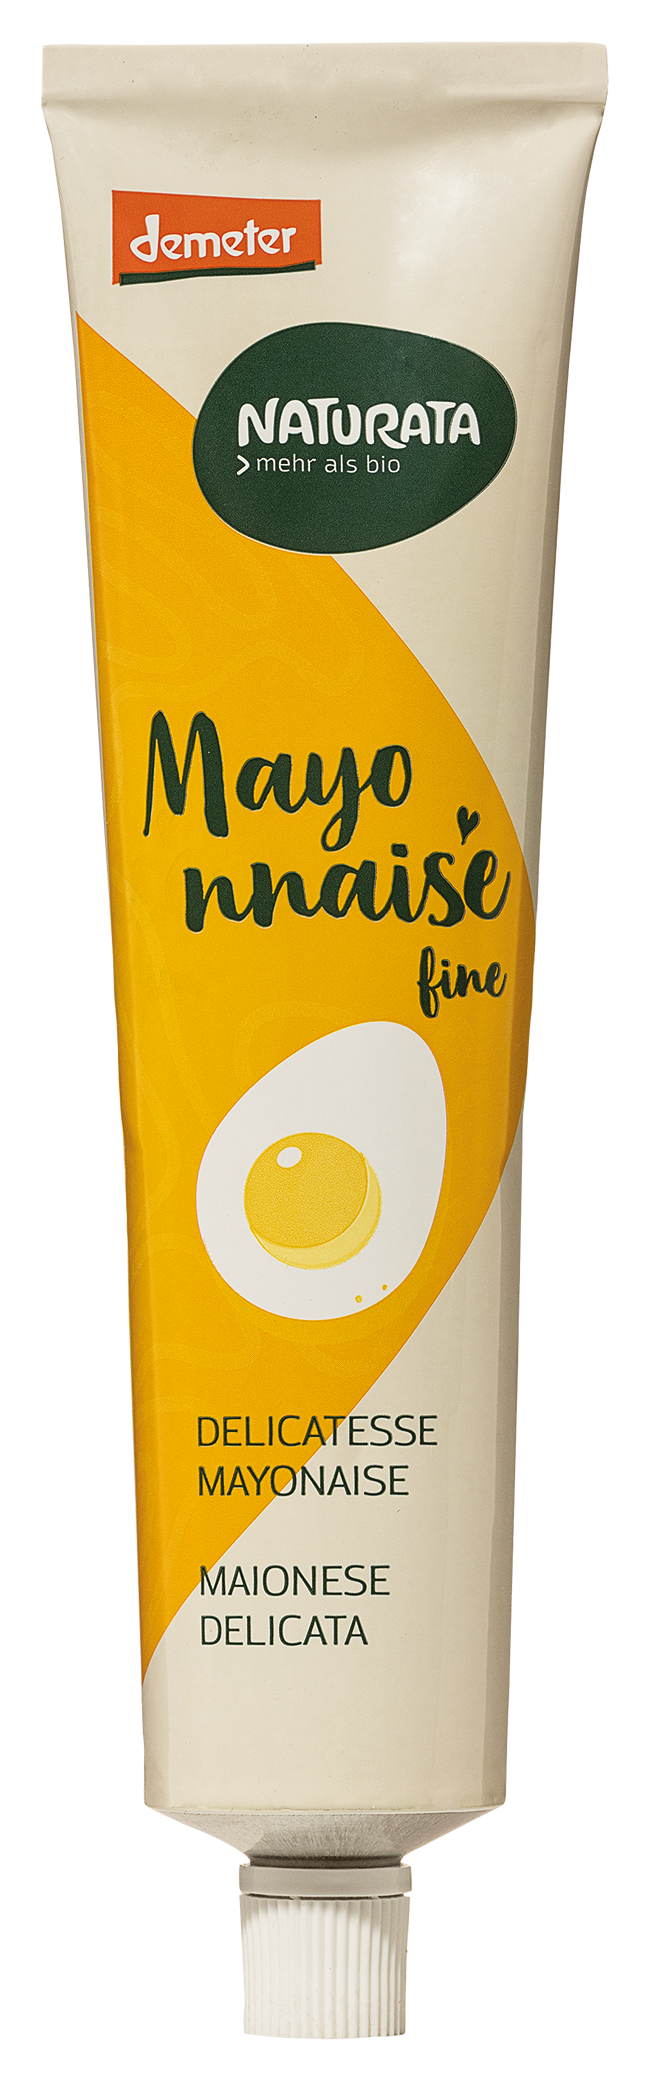 Sauce mayonnaise fine, 180g, Naturata